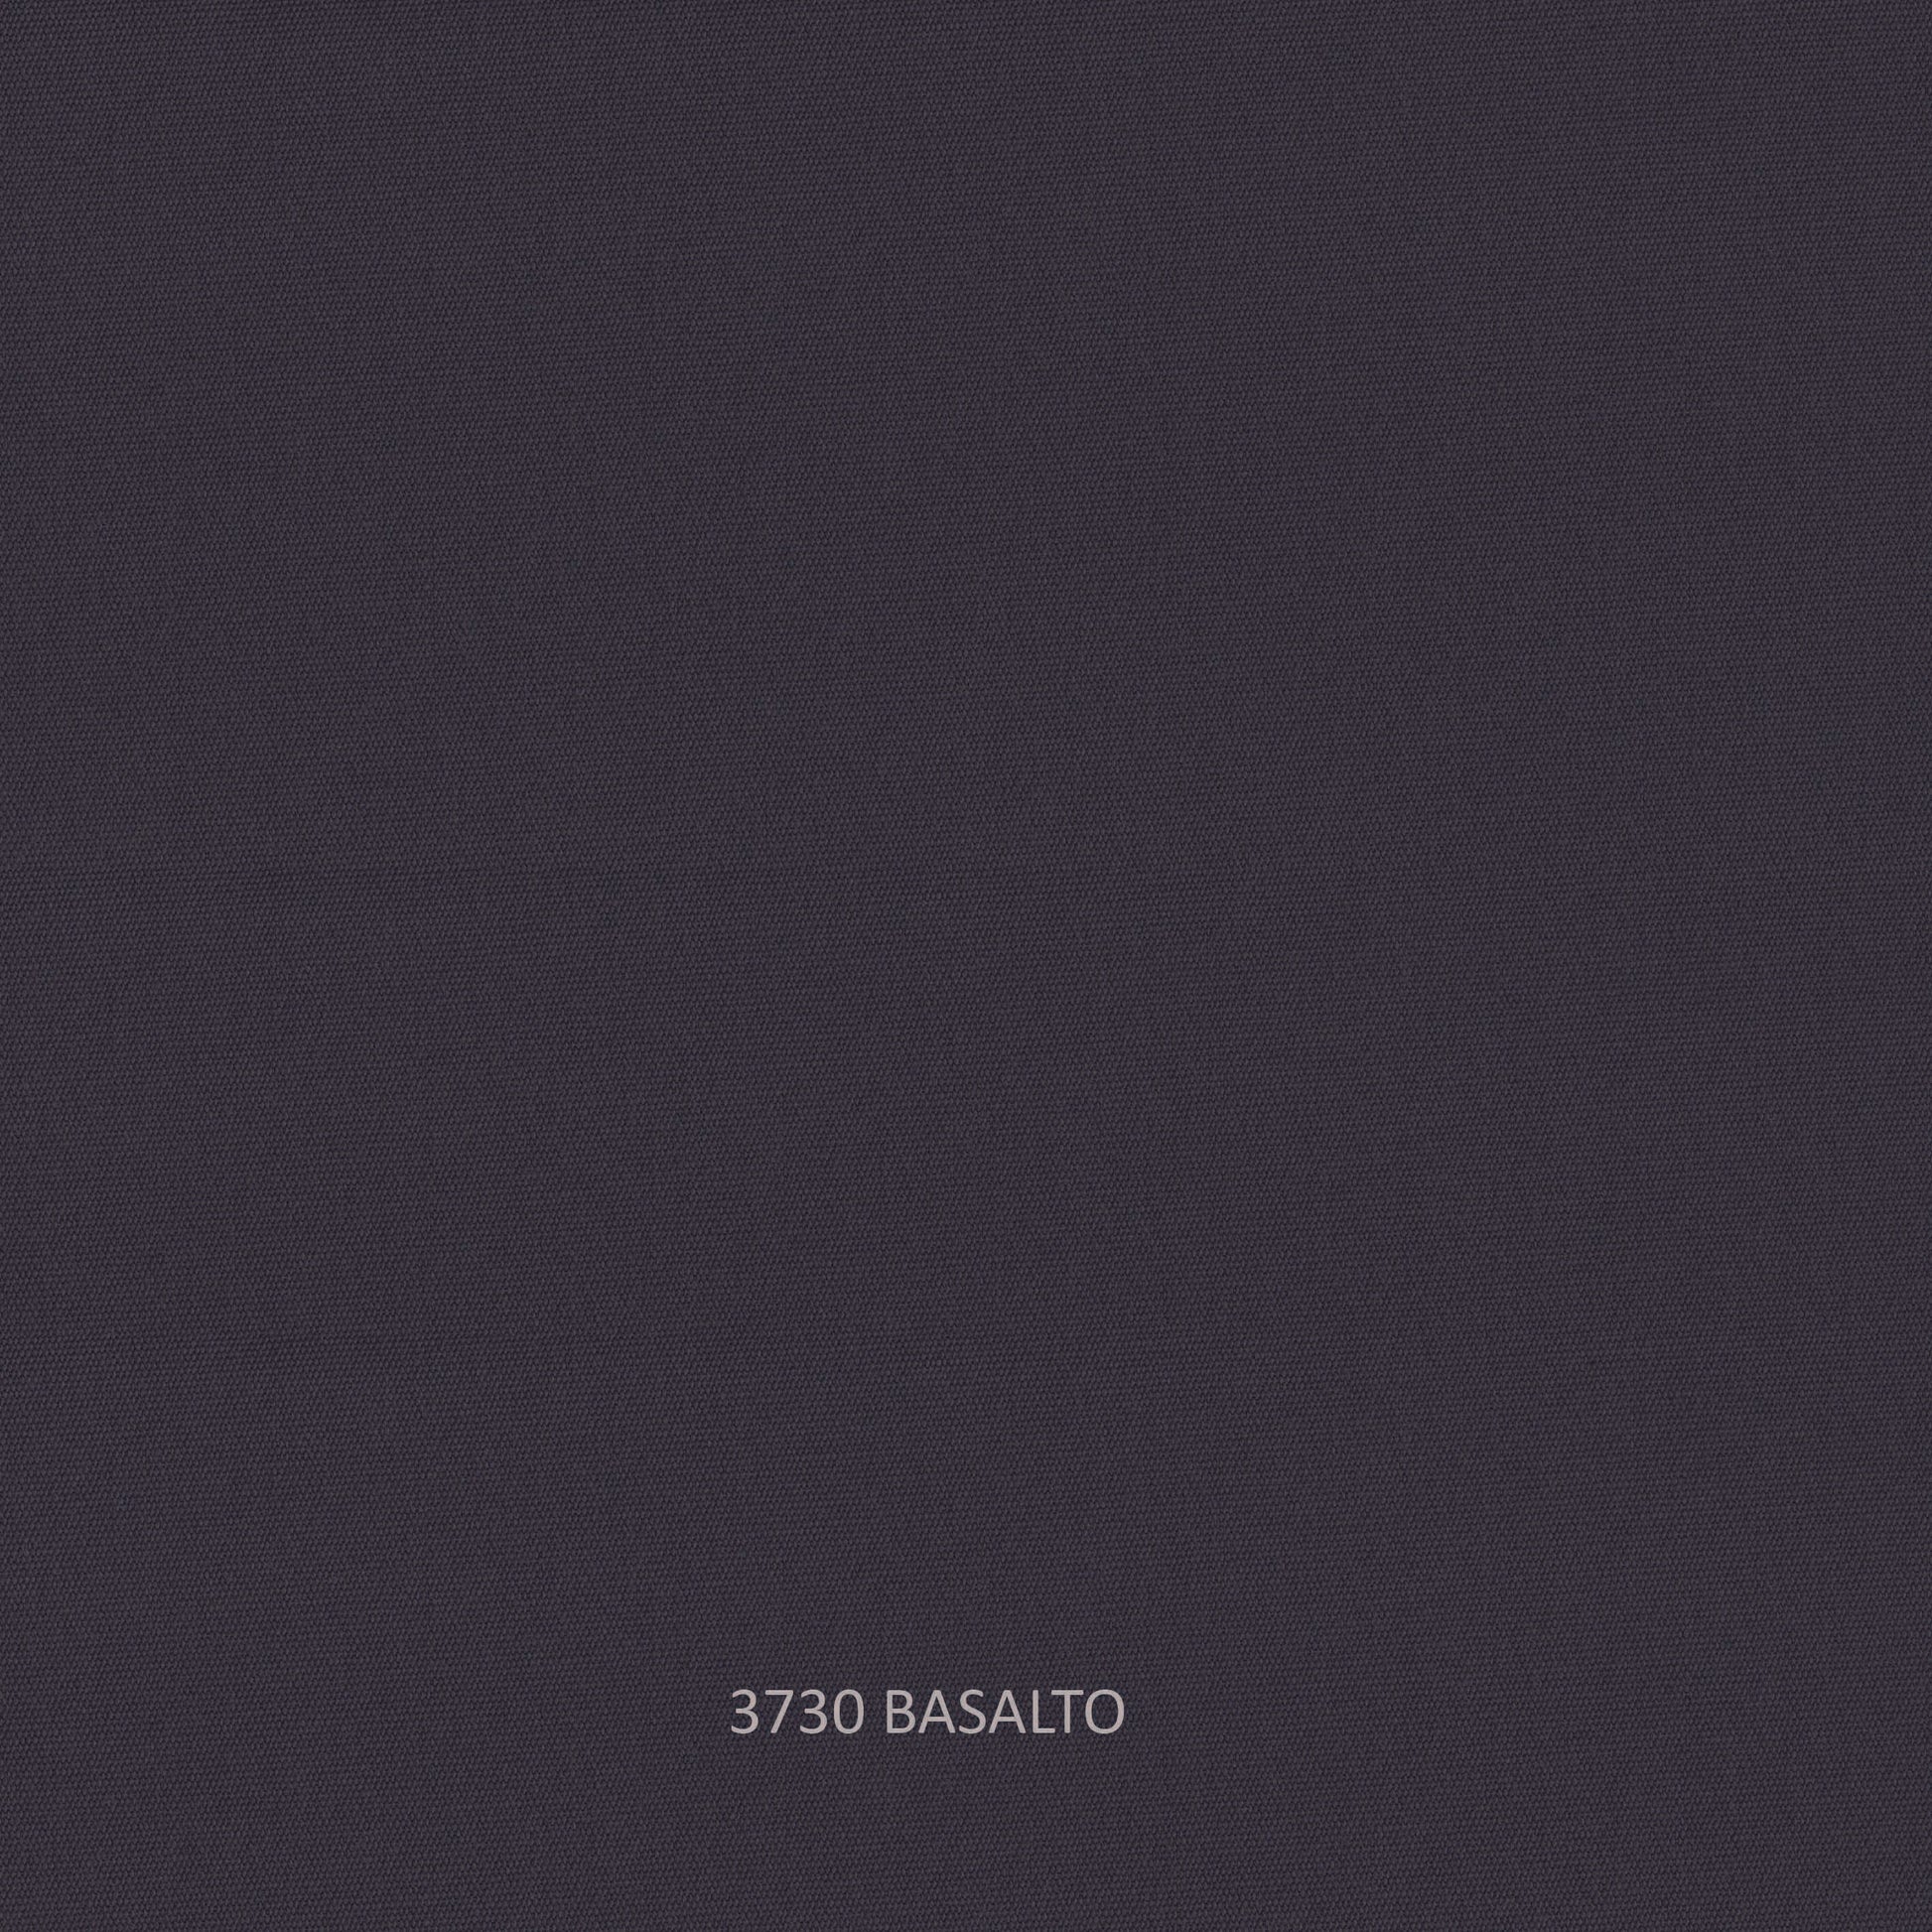 Brando Sea Shell Love Seat - PadioLiving - Brando Sea Shell Love Seat - Outdoor Love Seat - Silver Walnut 30mm Weave-Basalto(£2225) - PadioLiving